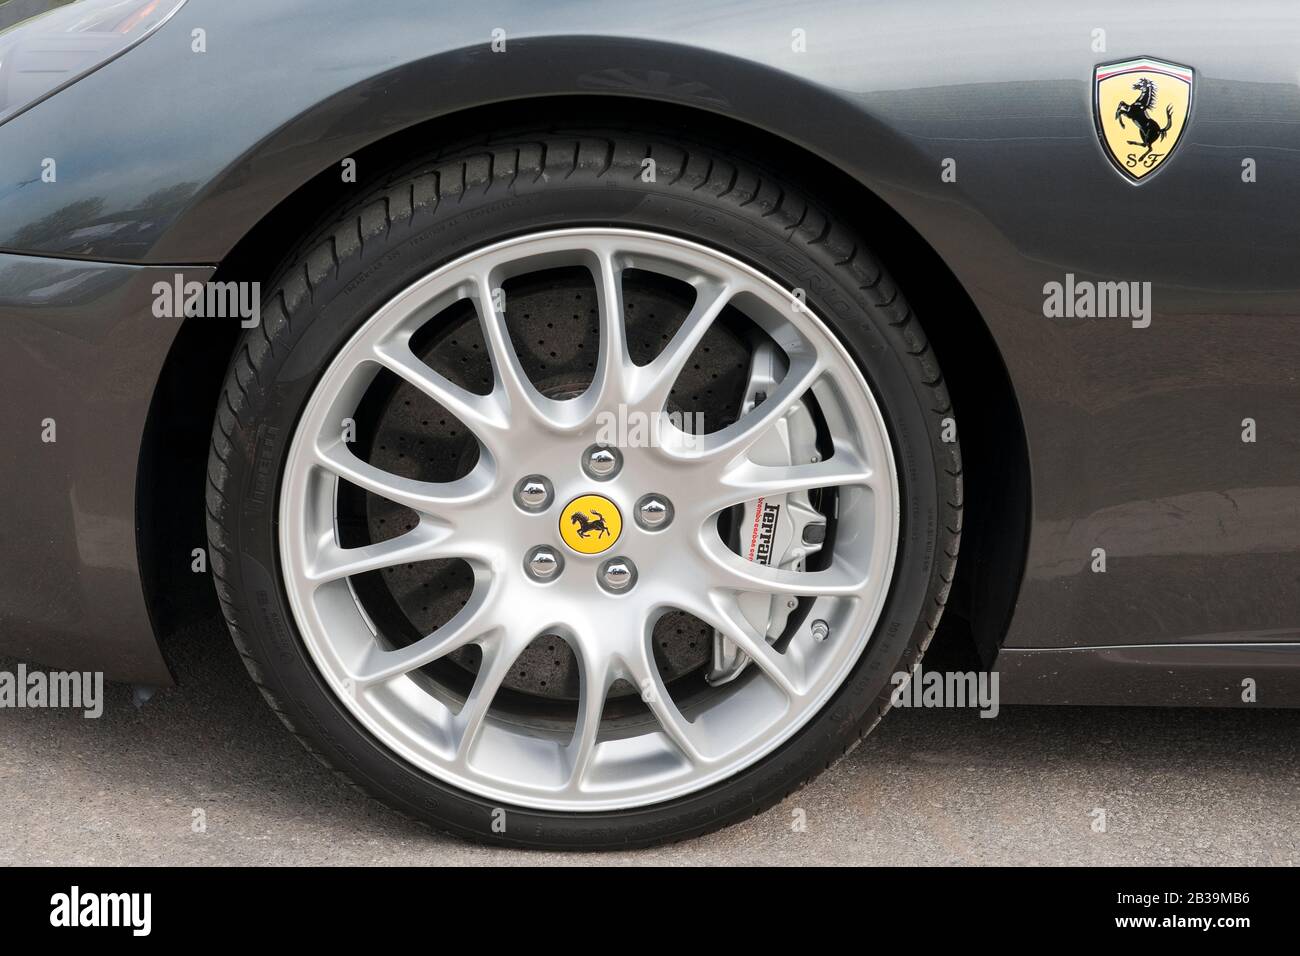 Ferrari Felge und Logo Stock Photo - Alamy